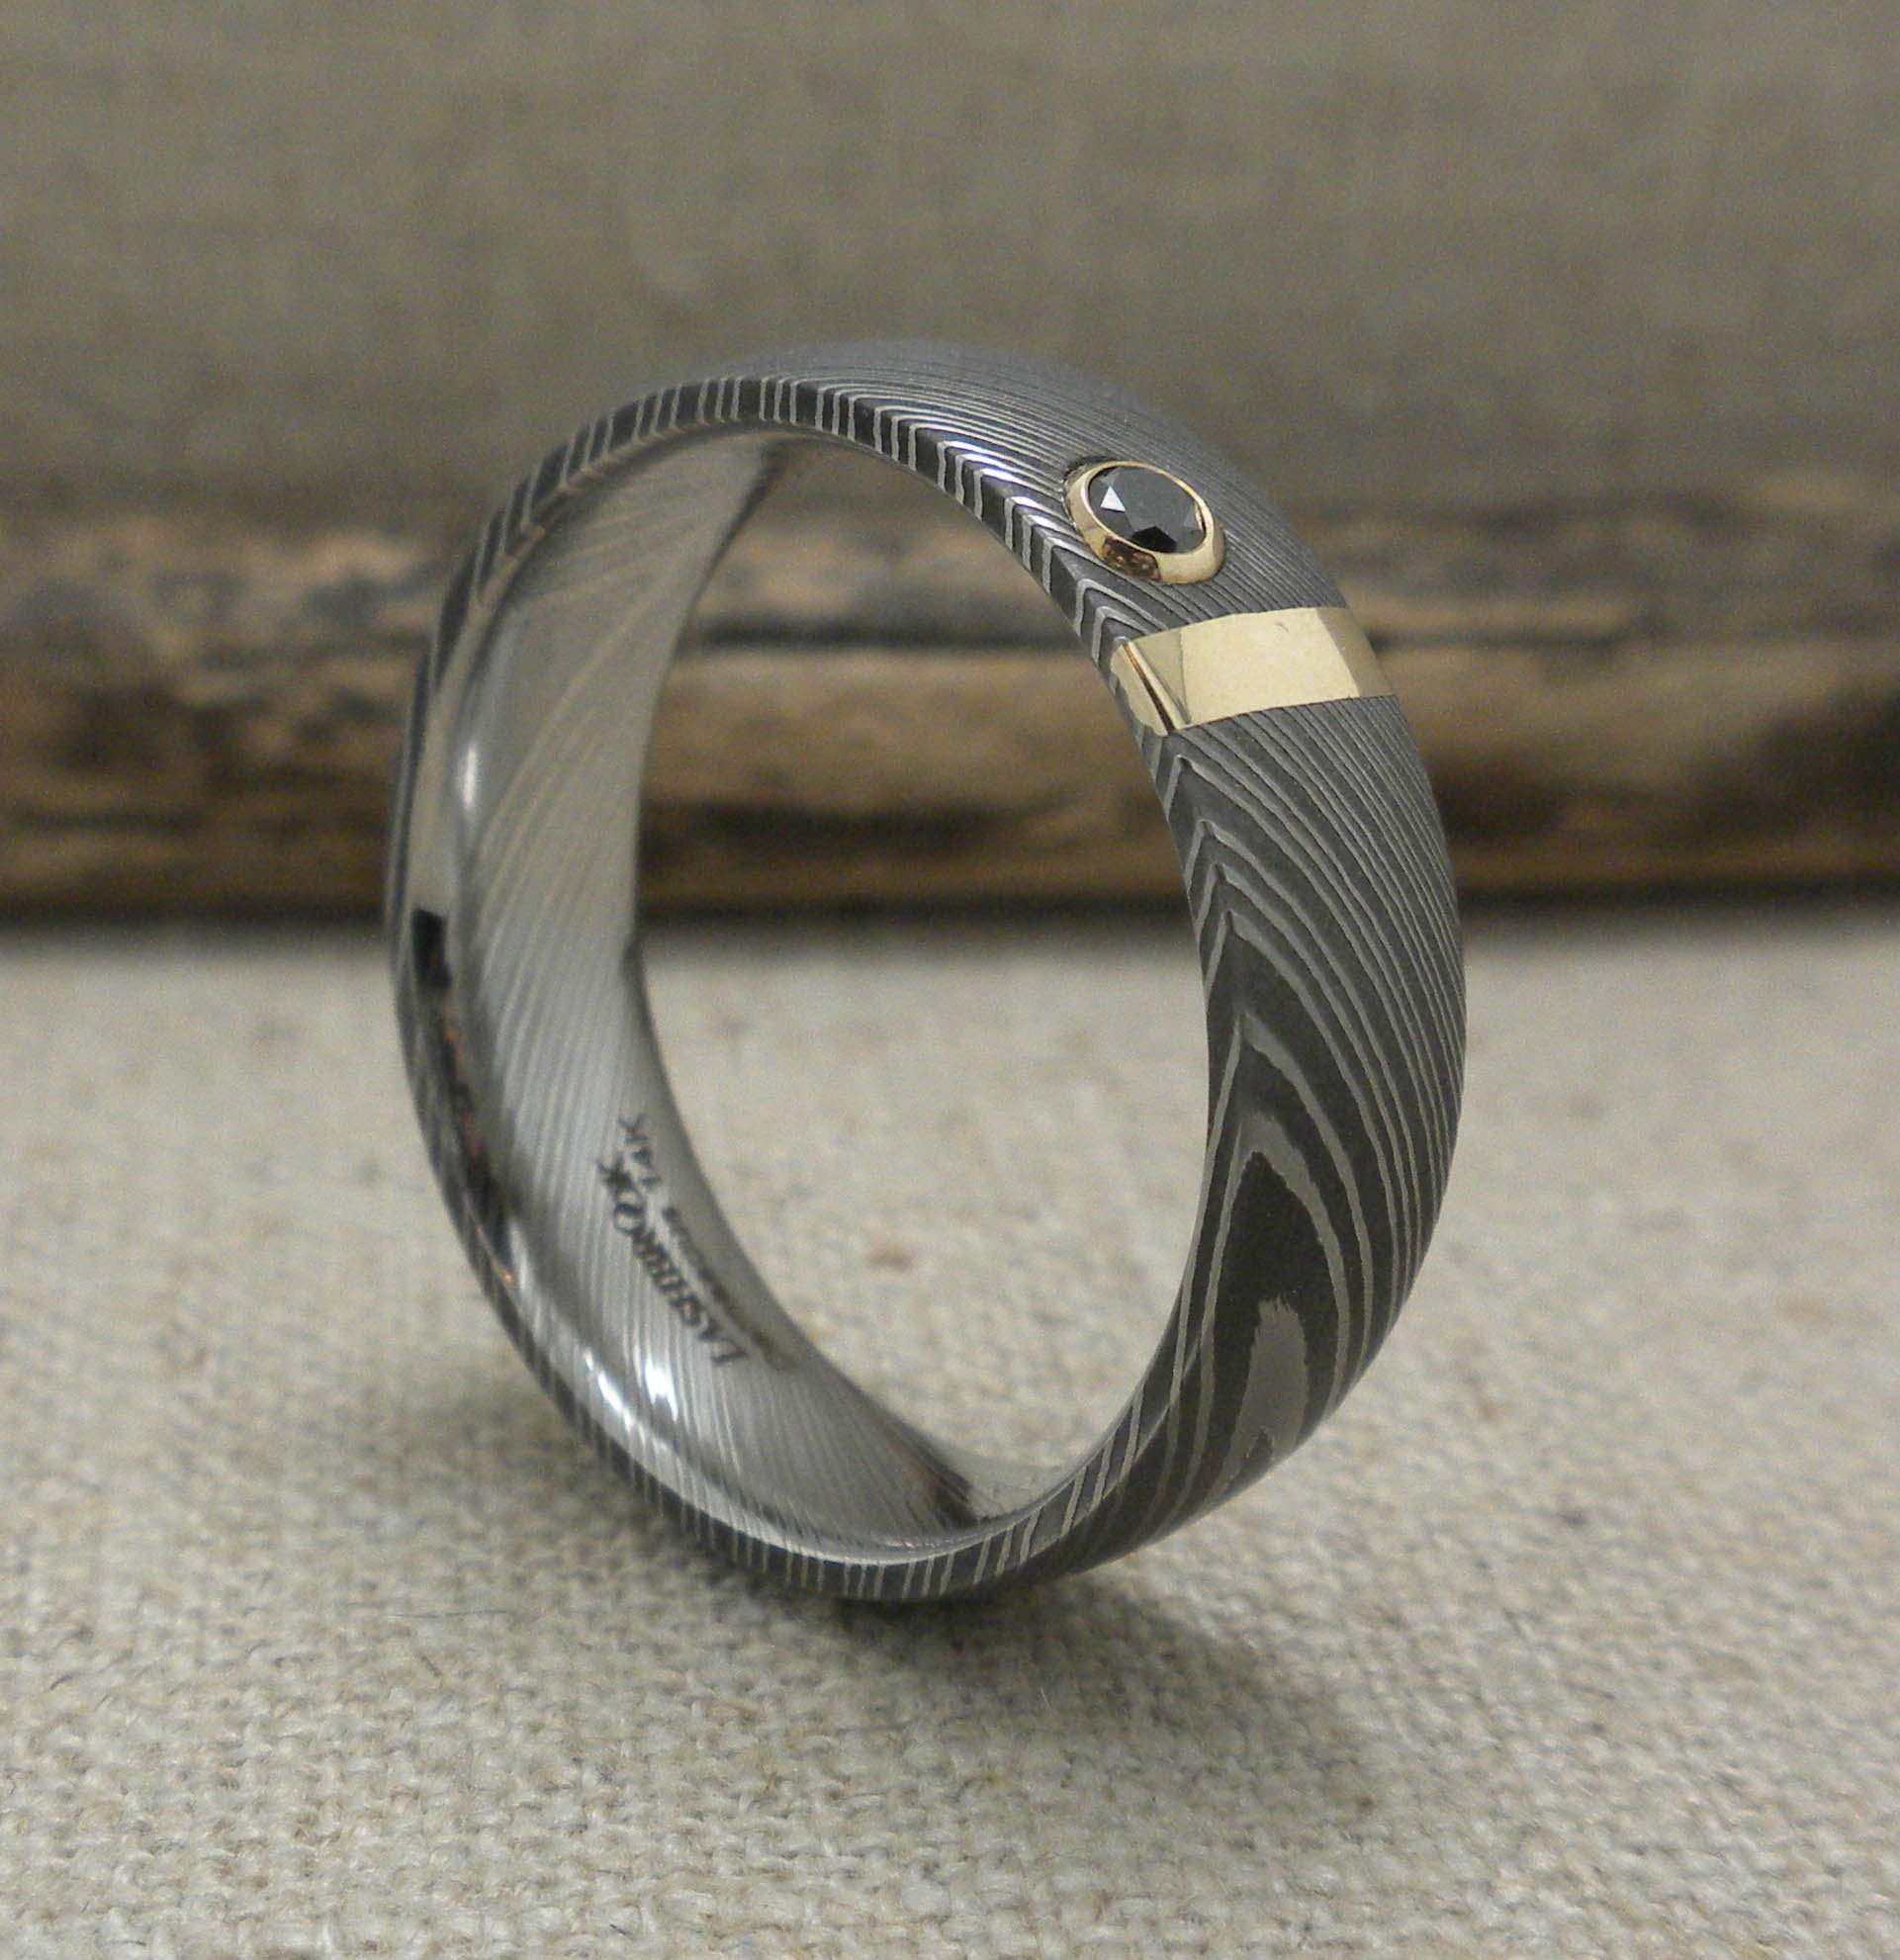 Damascus Steel Wedding Ring with Black Diamond